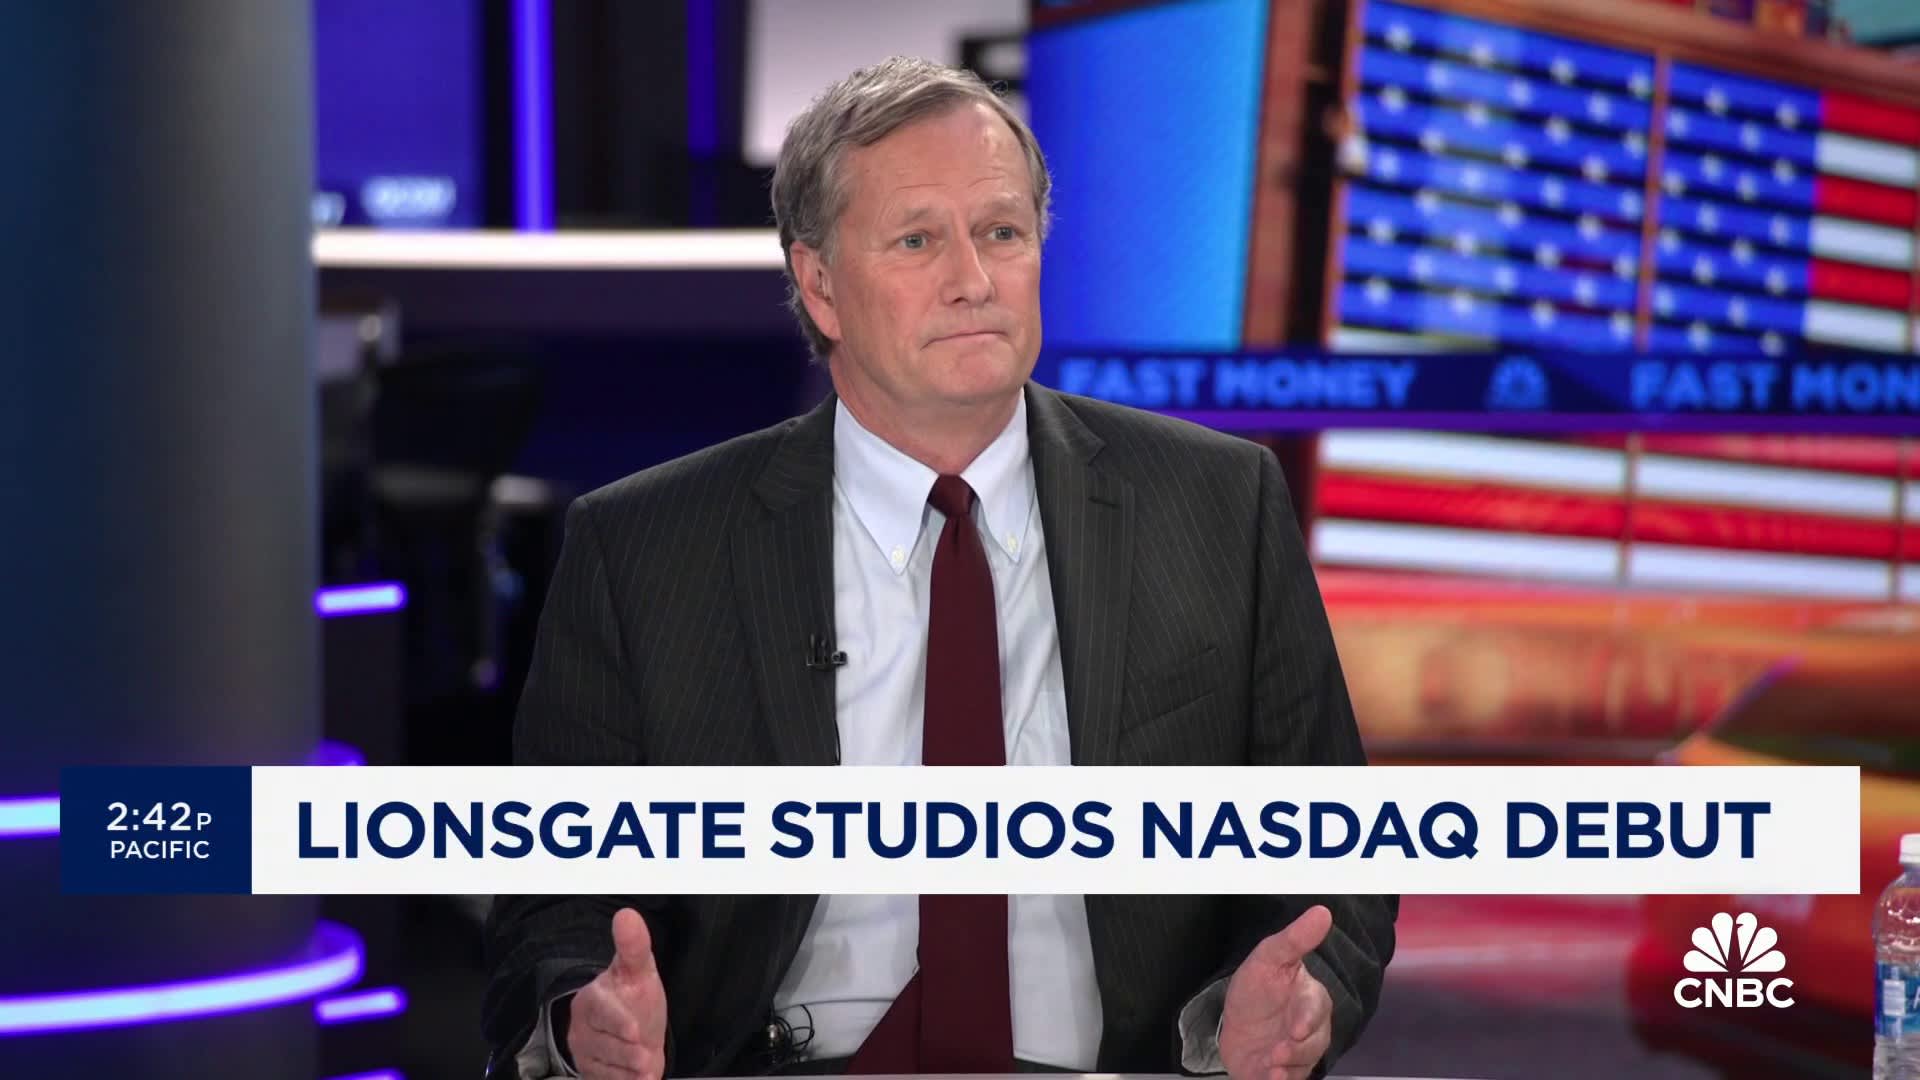 Lionsgate Studios’ Vice Chairman talks Nasdaq debut and bundle battle [Video]